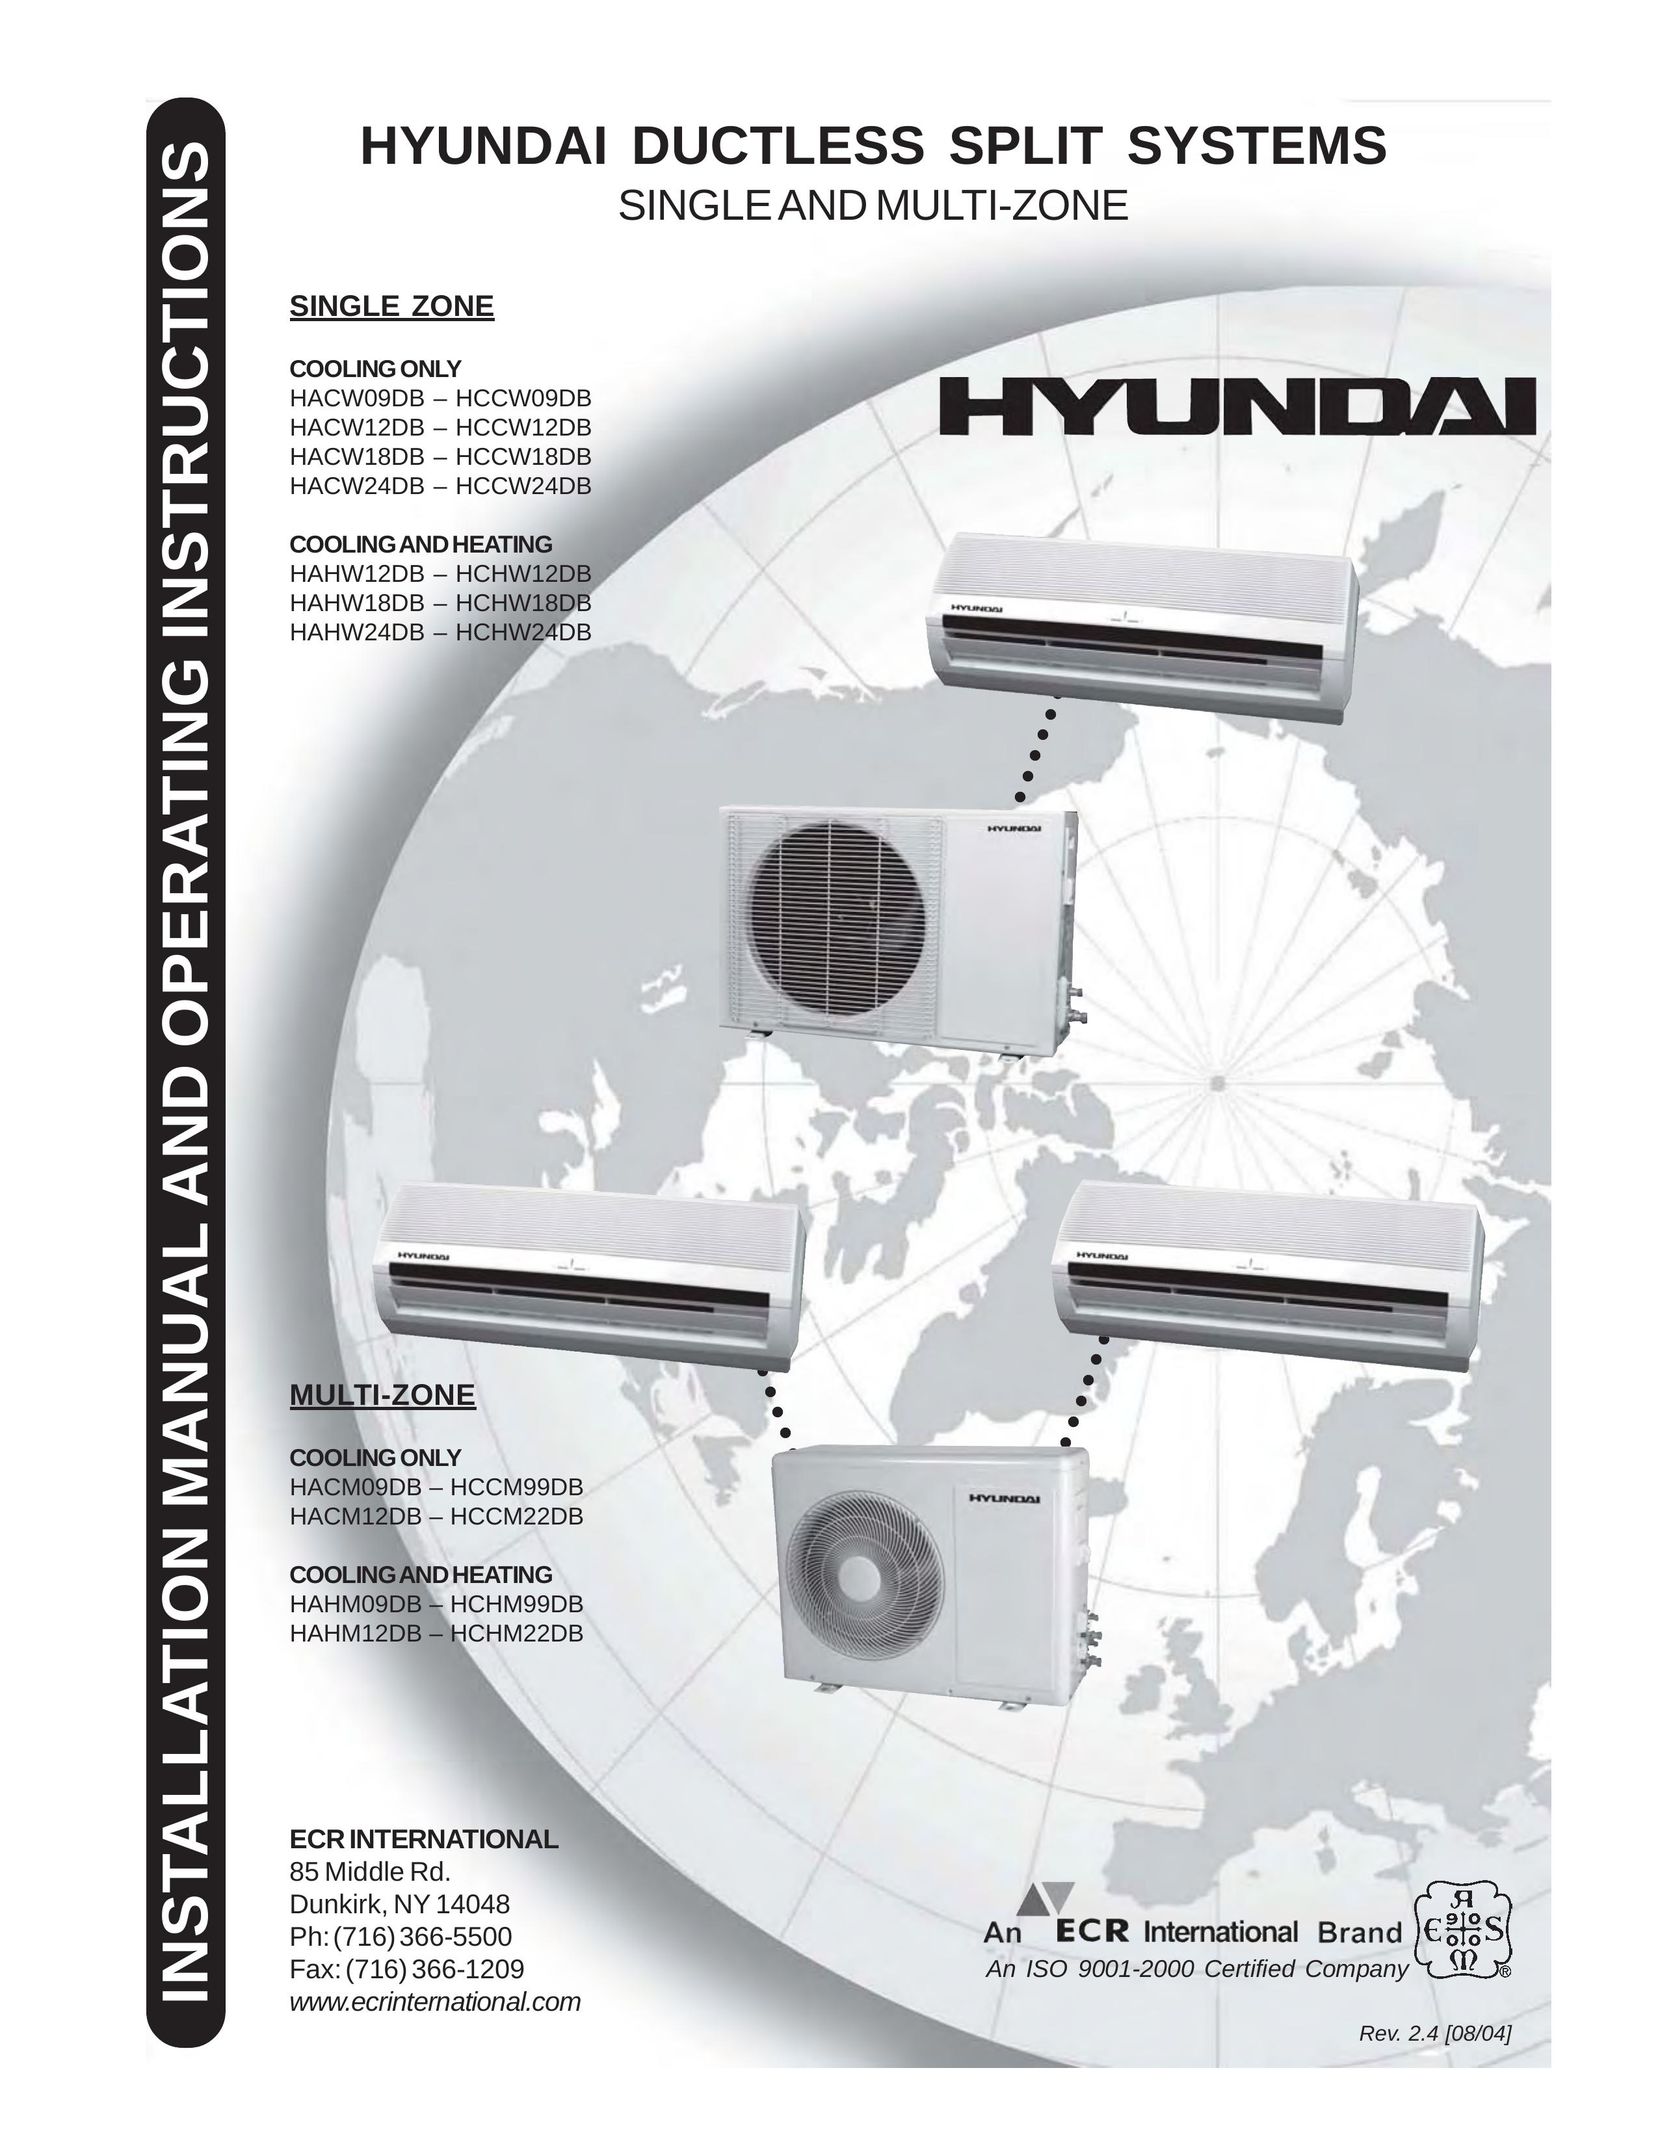 Hyundai HACM09DB - HCCM99DB Air Conditioner User Manual